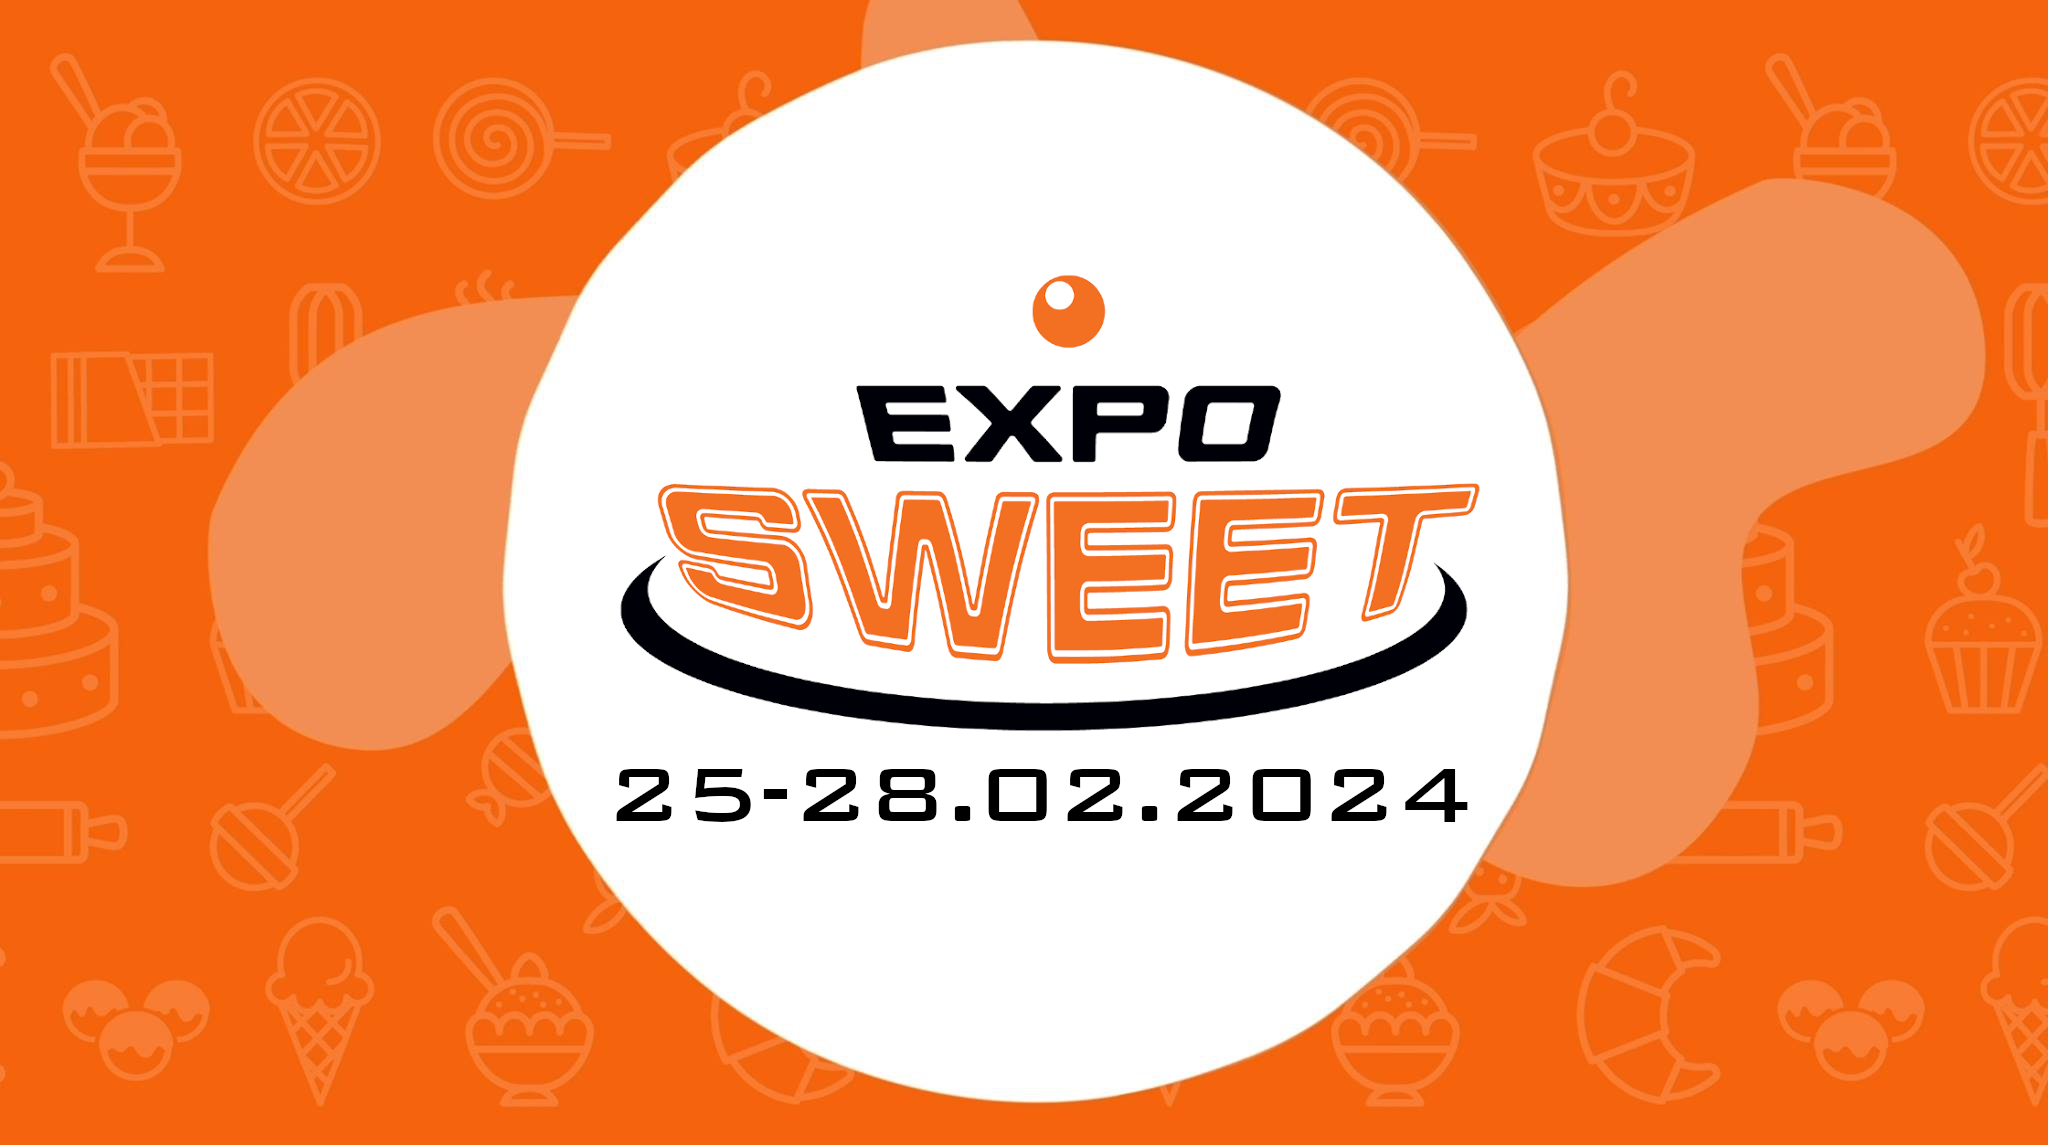 Targi Expo Sweet już niedługo